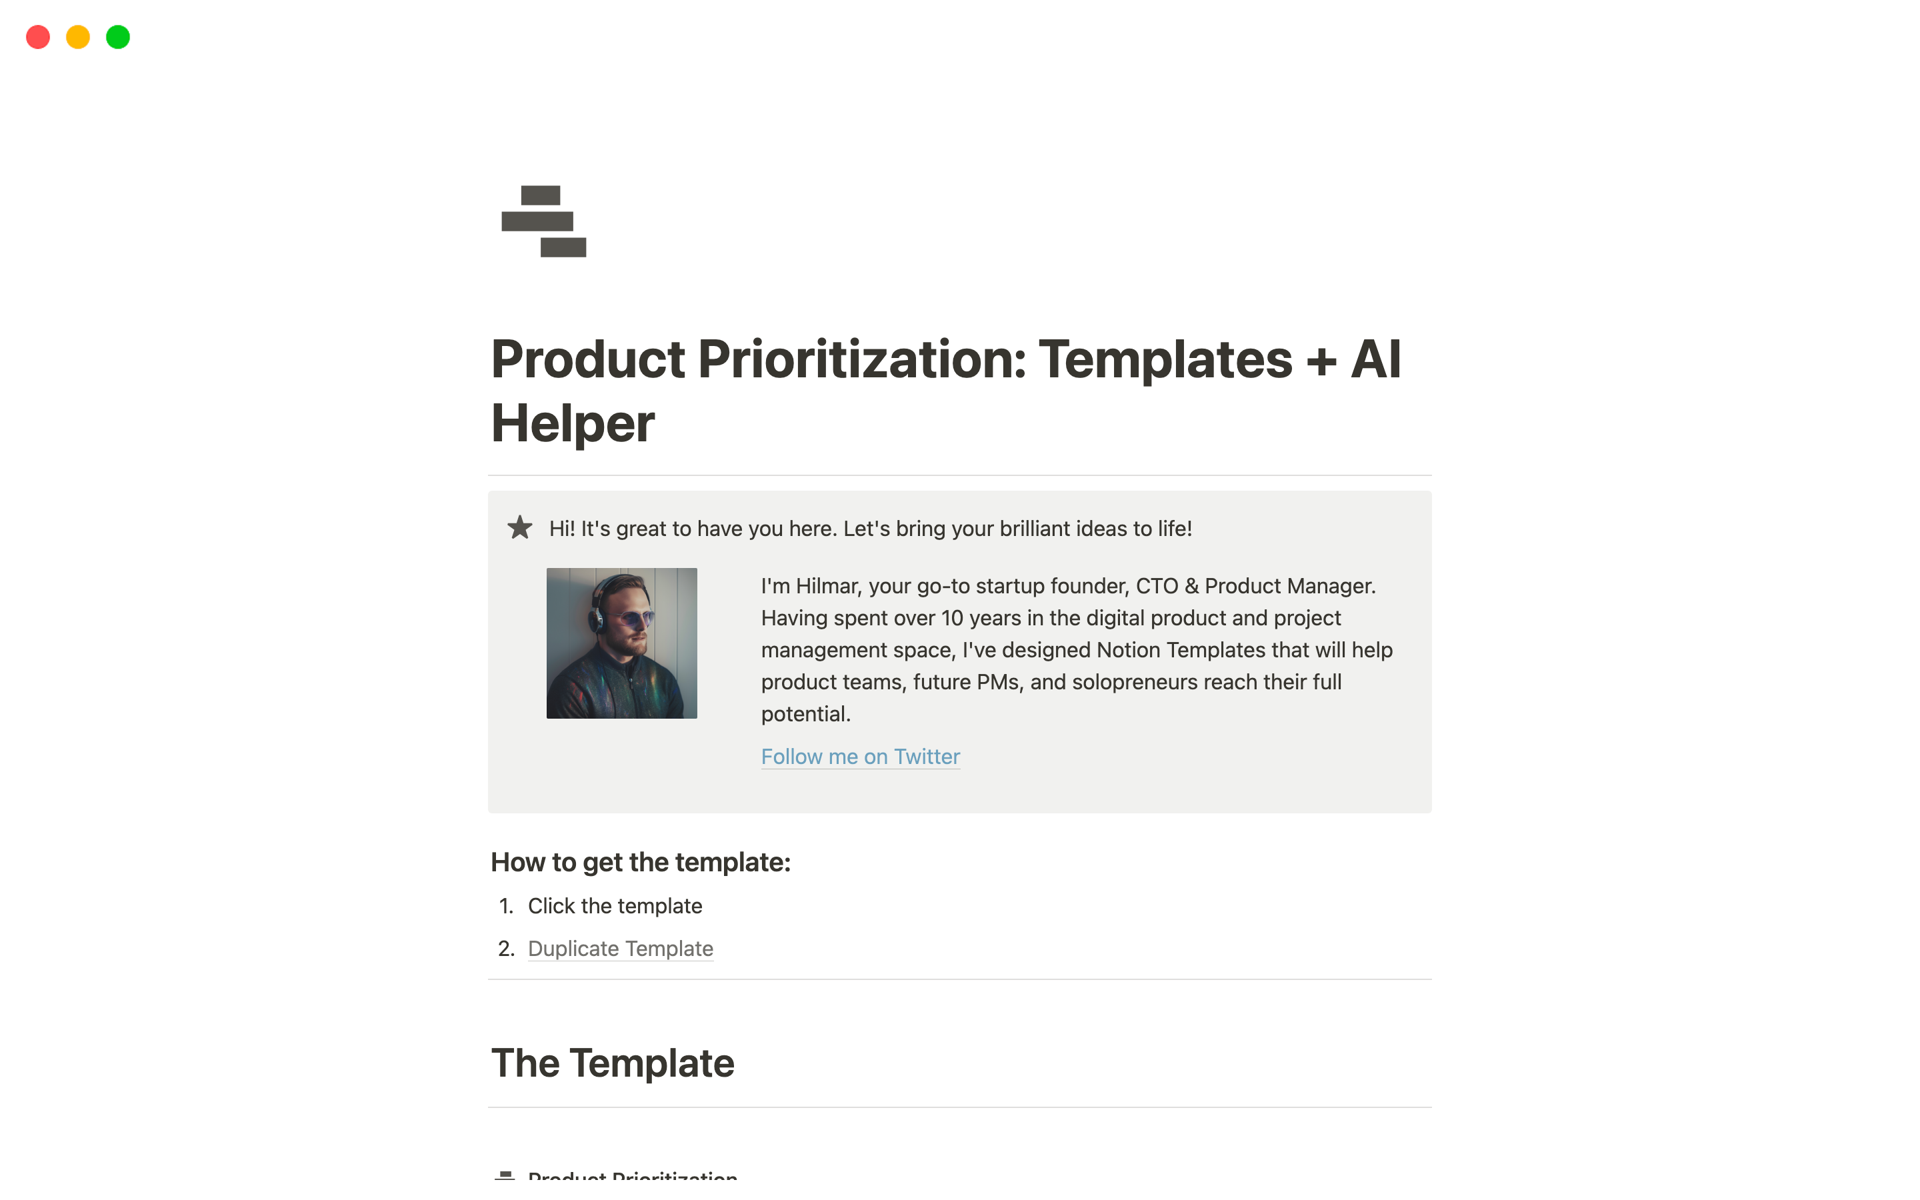 Product Prioritization: Templates + AI Helperのテンプレートのプレビュー